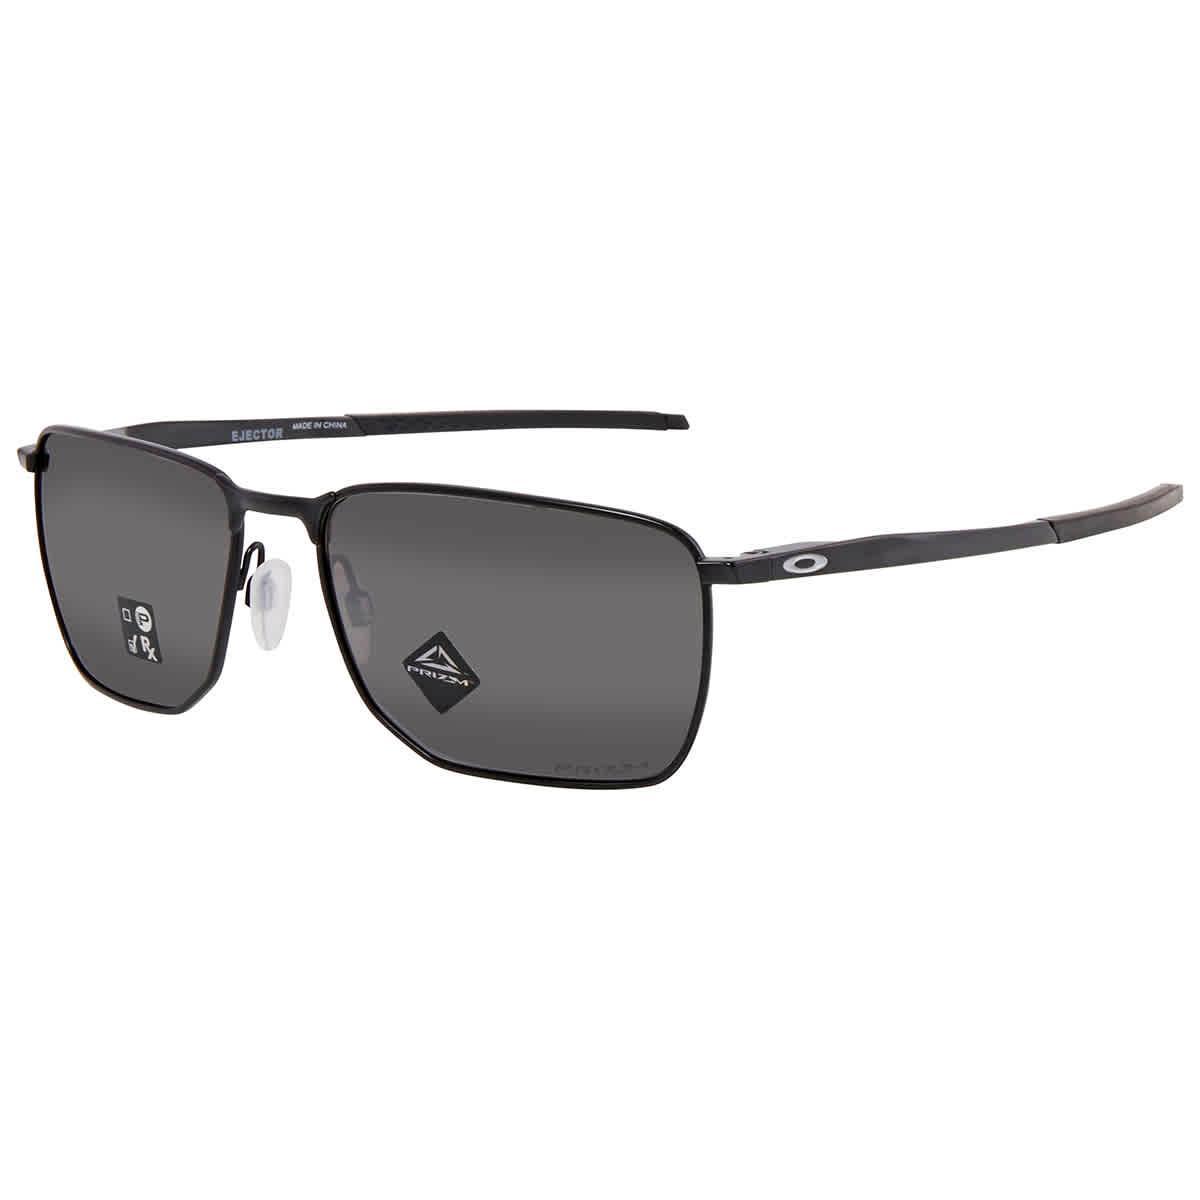 Oakley EJECTOR Polarized Sunglasses 0OO4142, Dark Grey Product Image